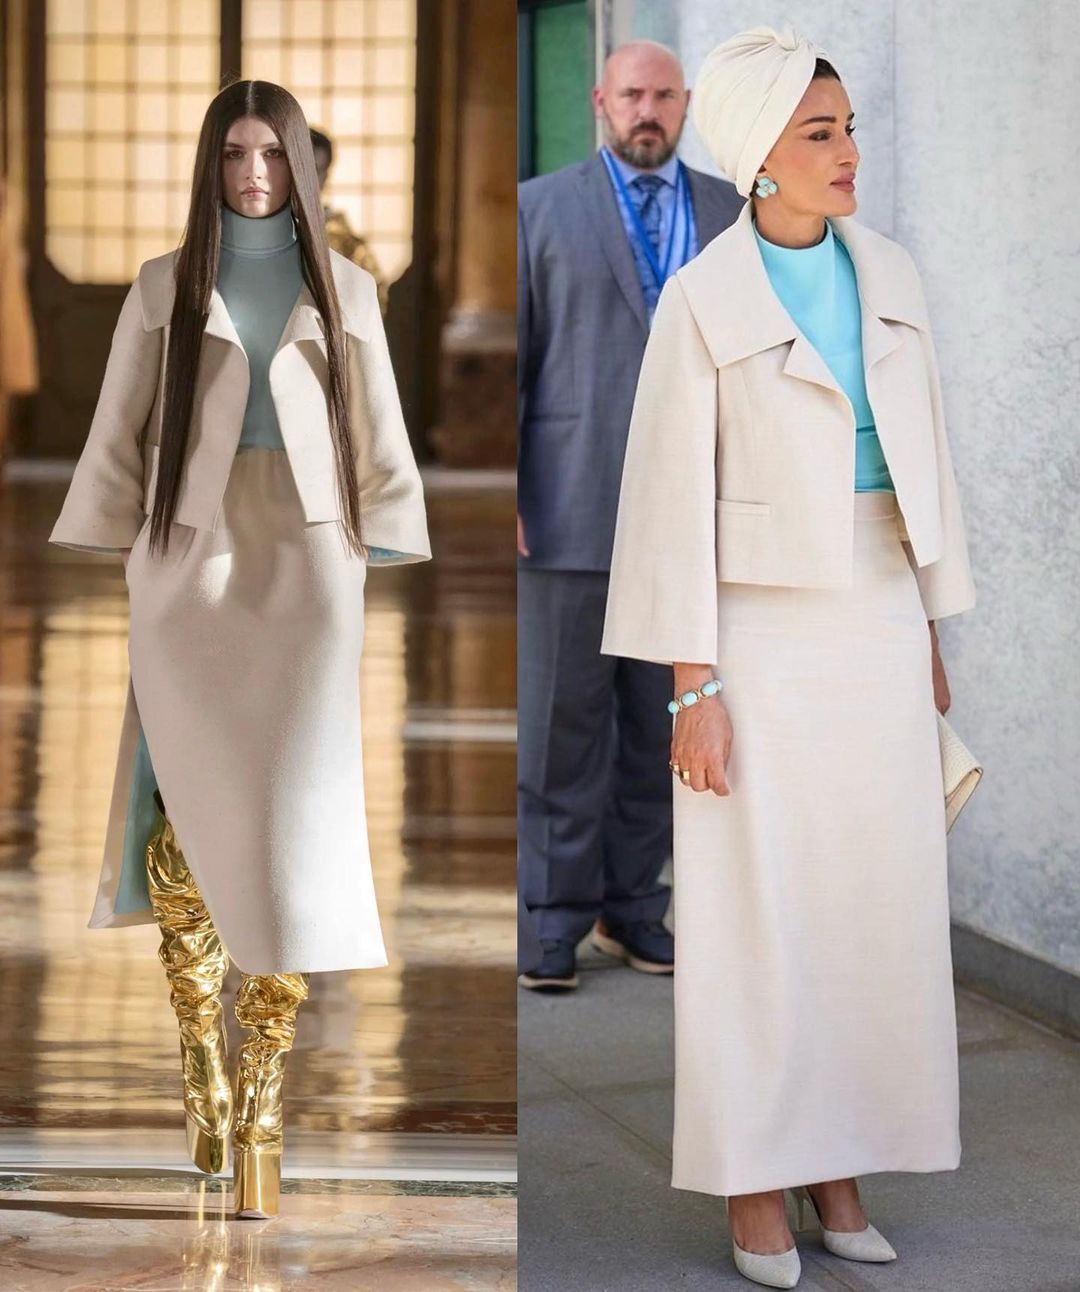 Sheikha Moza: Behind Her Iconic New York Fashion Looks